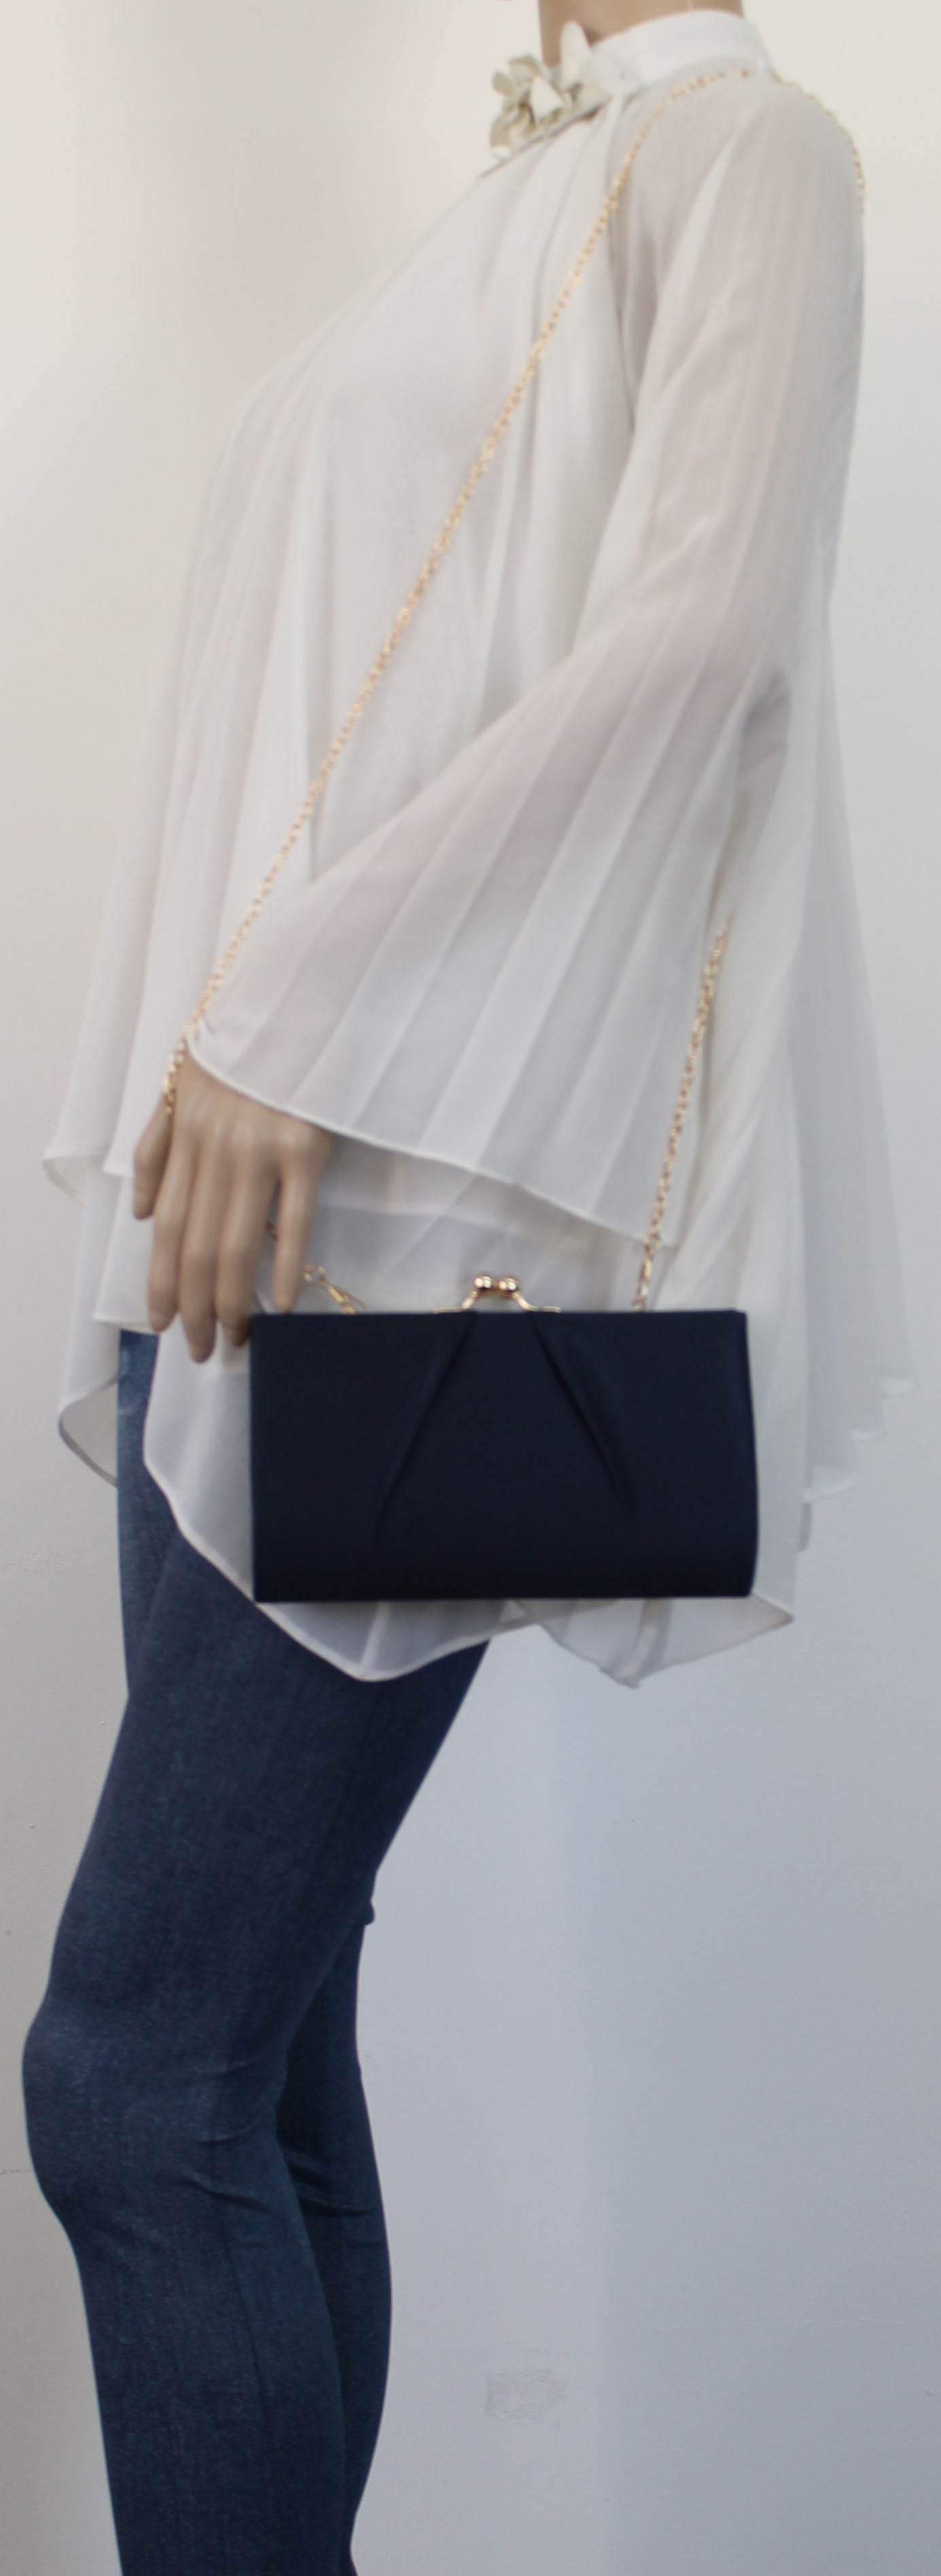 SWANKYSWANS Katy Satin Clutch Bag Navy Blue Cute Cheap Clutch Bag For Weddings School and Work